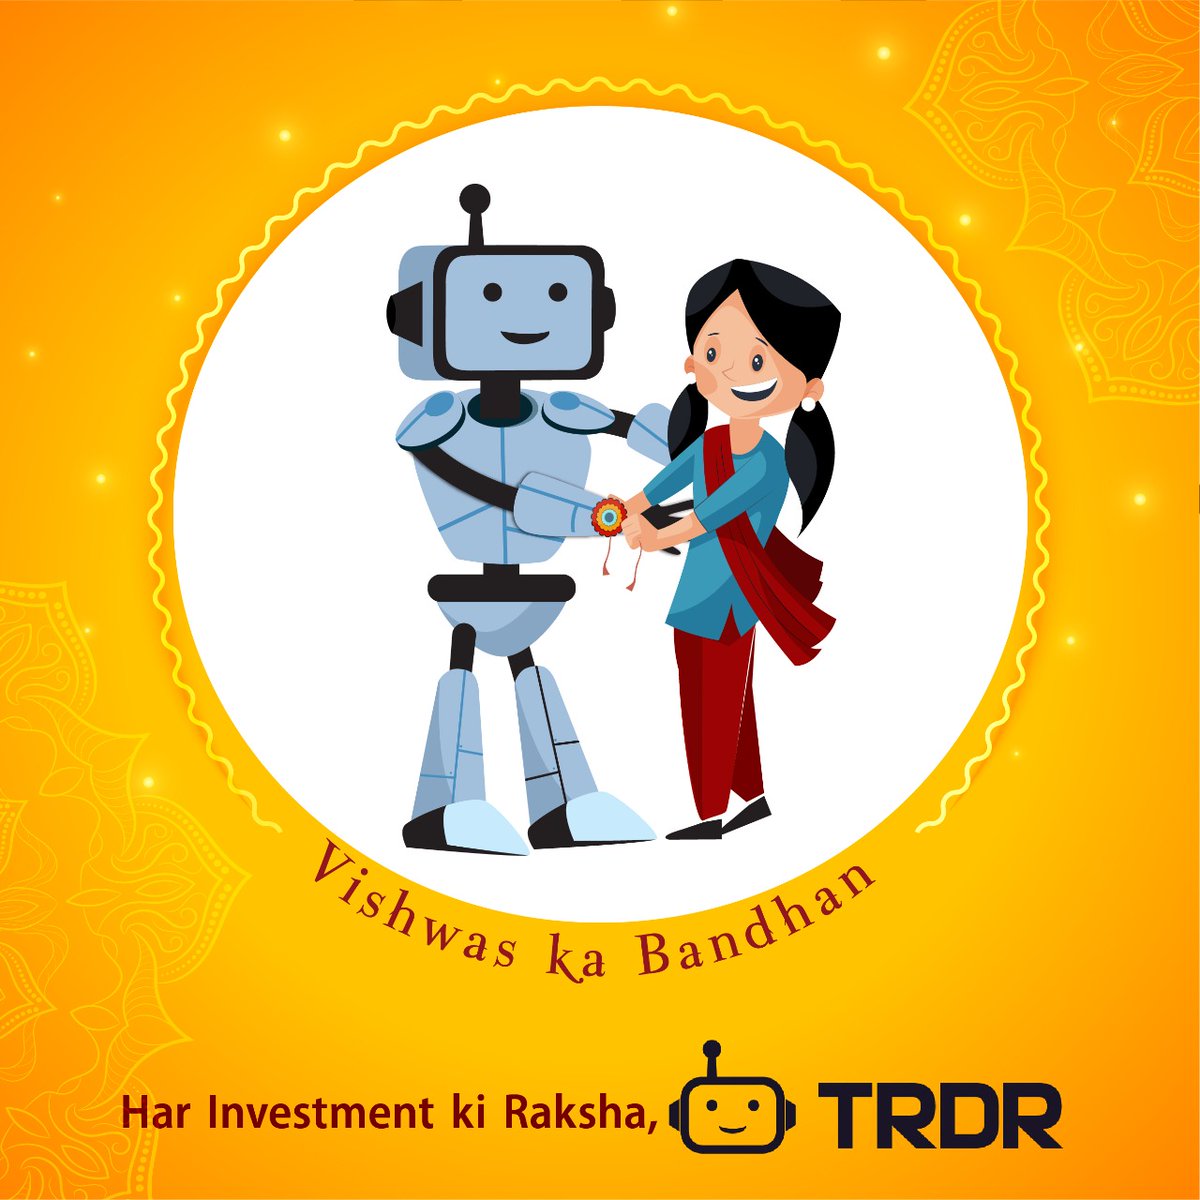 Har Investment ki Raksha!

#trdr #financialplanning #moneymanagement #investmentmadesimple #learninvestment #simplefinance #investmentforall #investing #rakshabandhan  #Zerobrokerage #AutomatedPortfolio